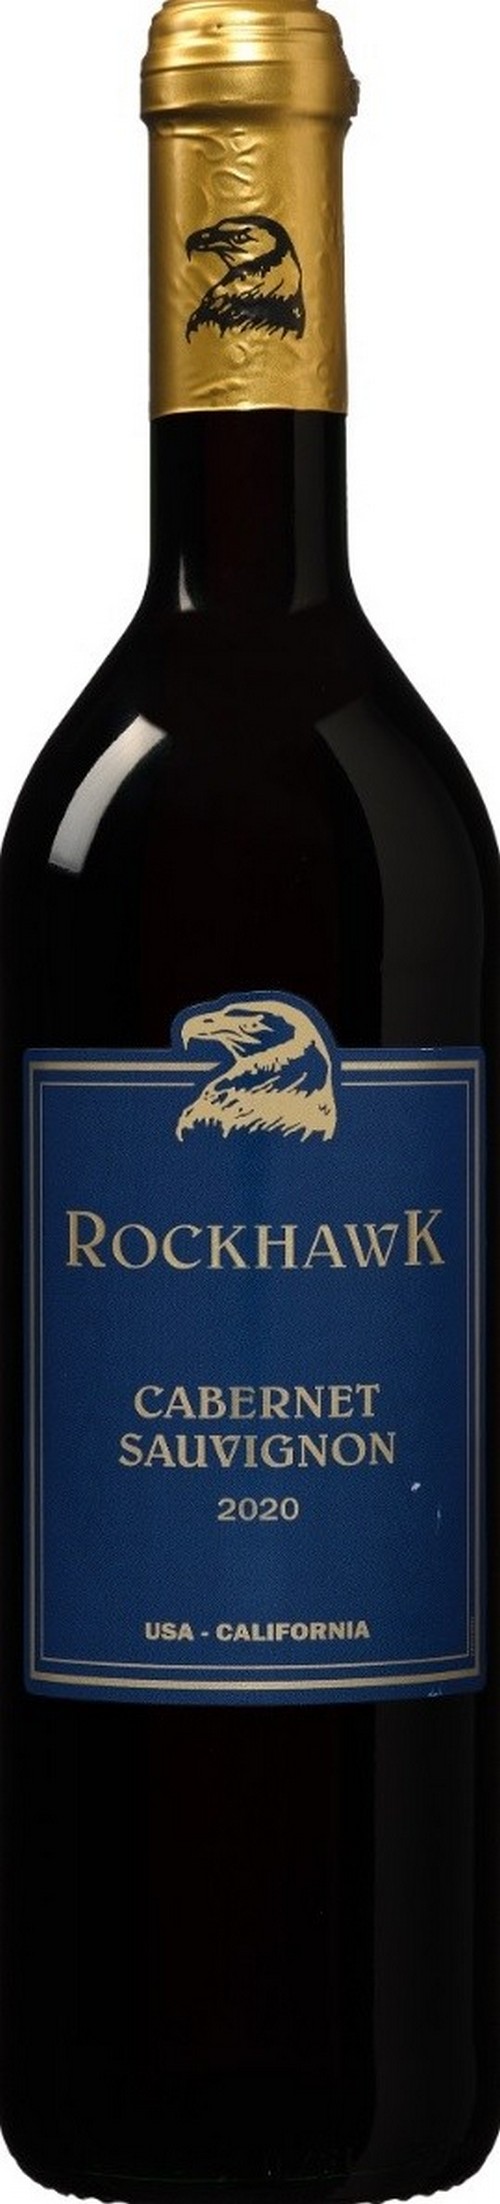 rockhawk-cabernet-sauvignon-california-2020